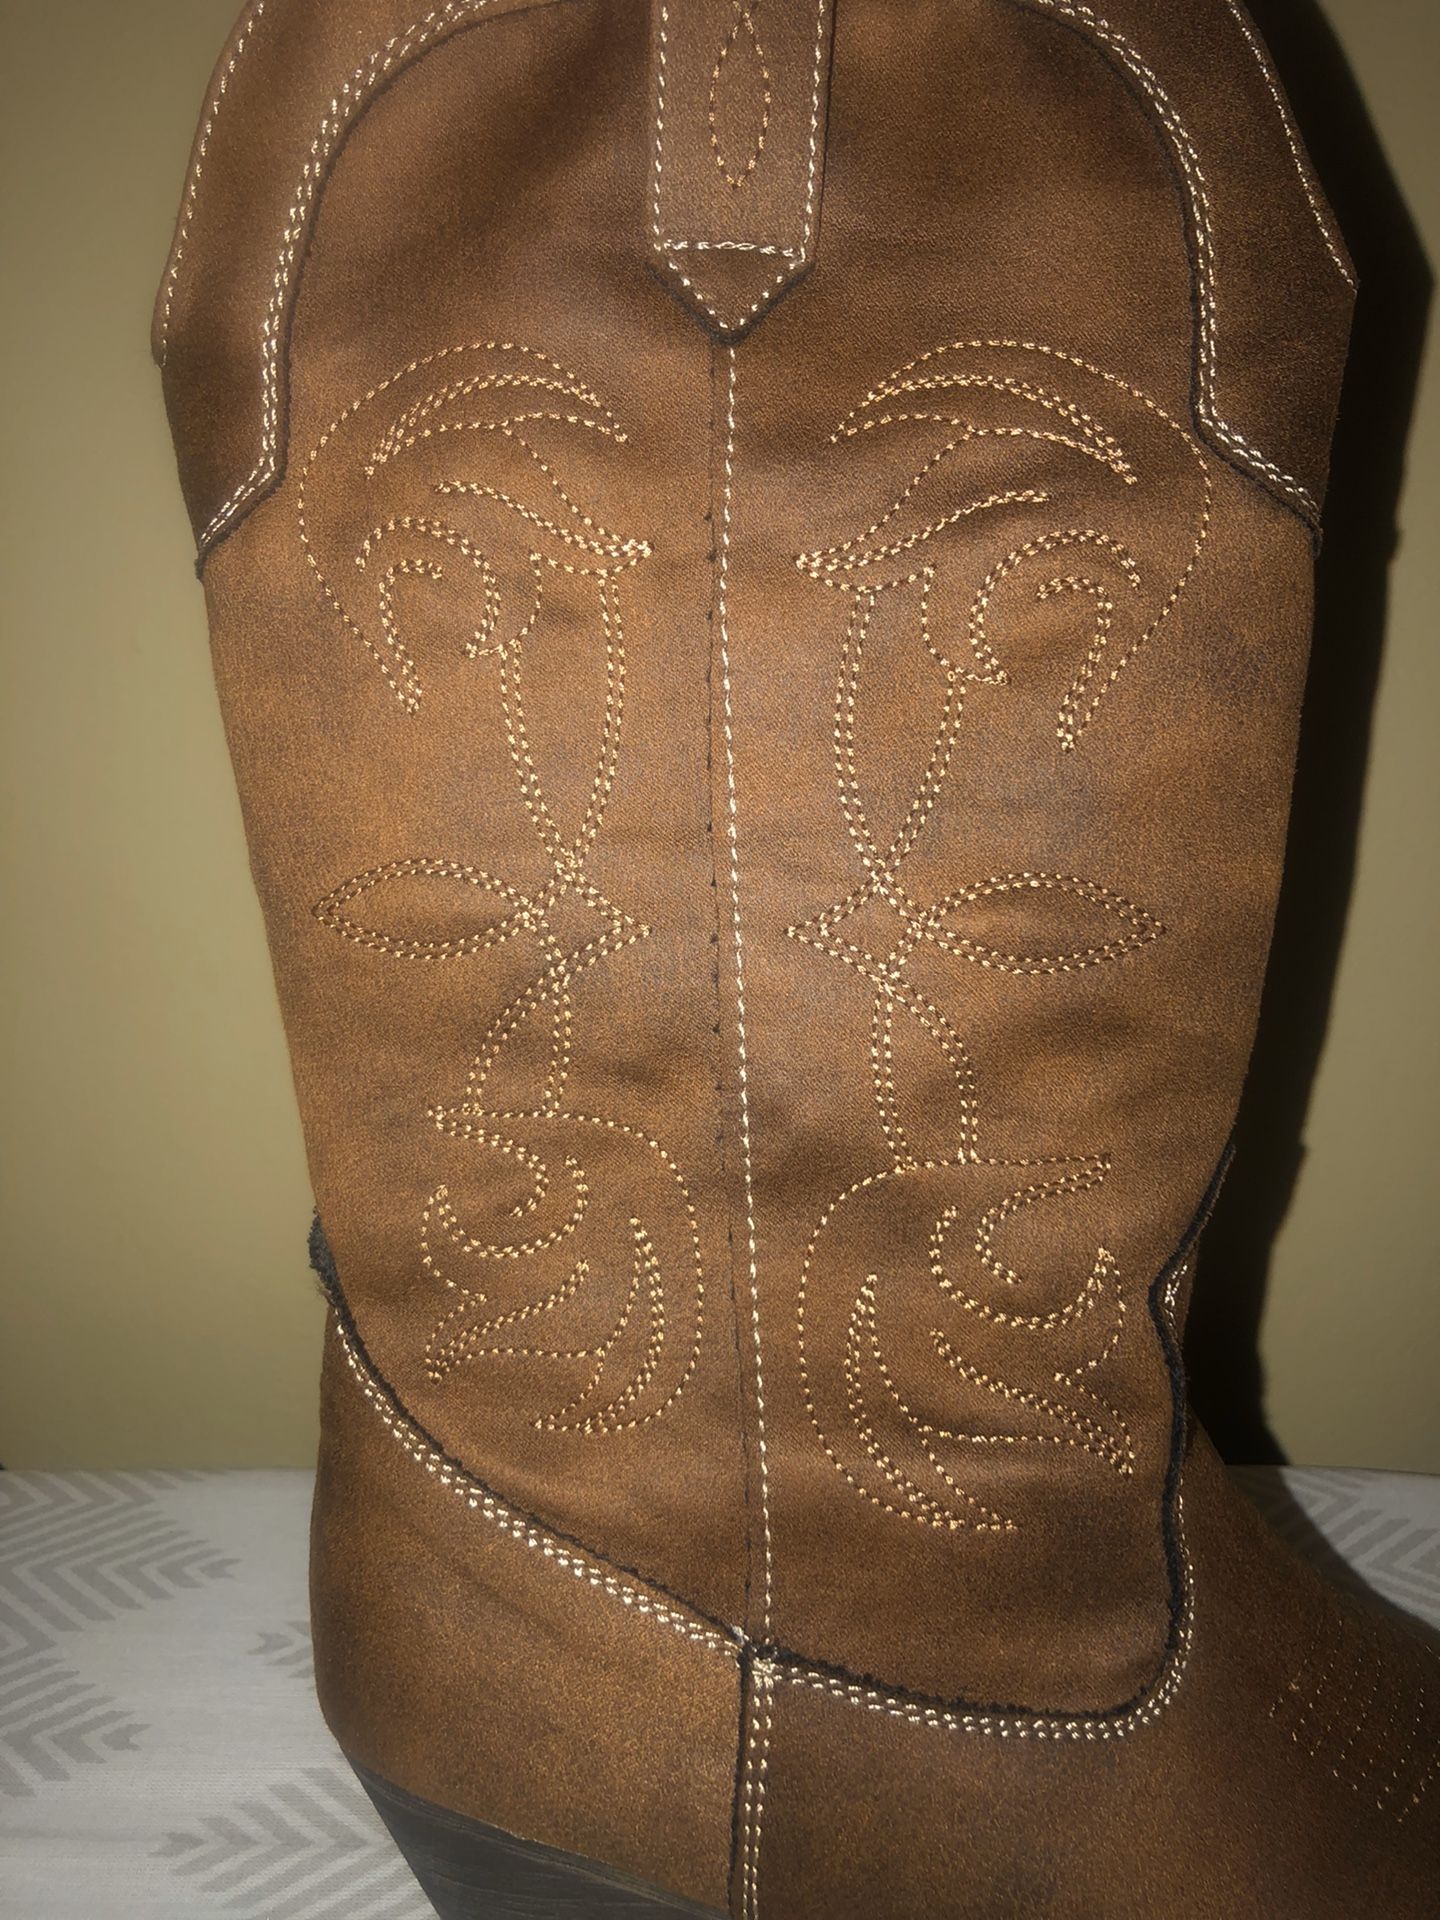 Women’s Cowboy Boots Size 8 For Sale $50